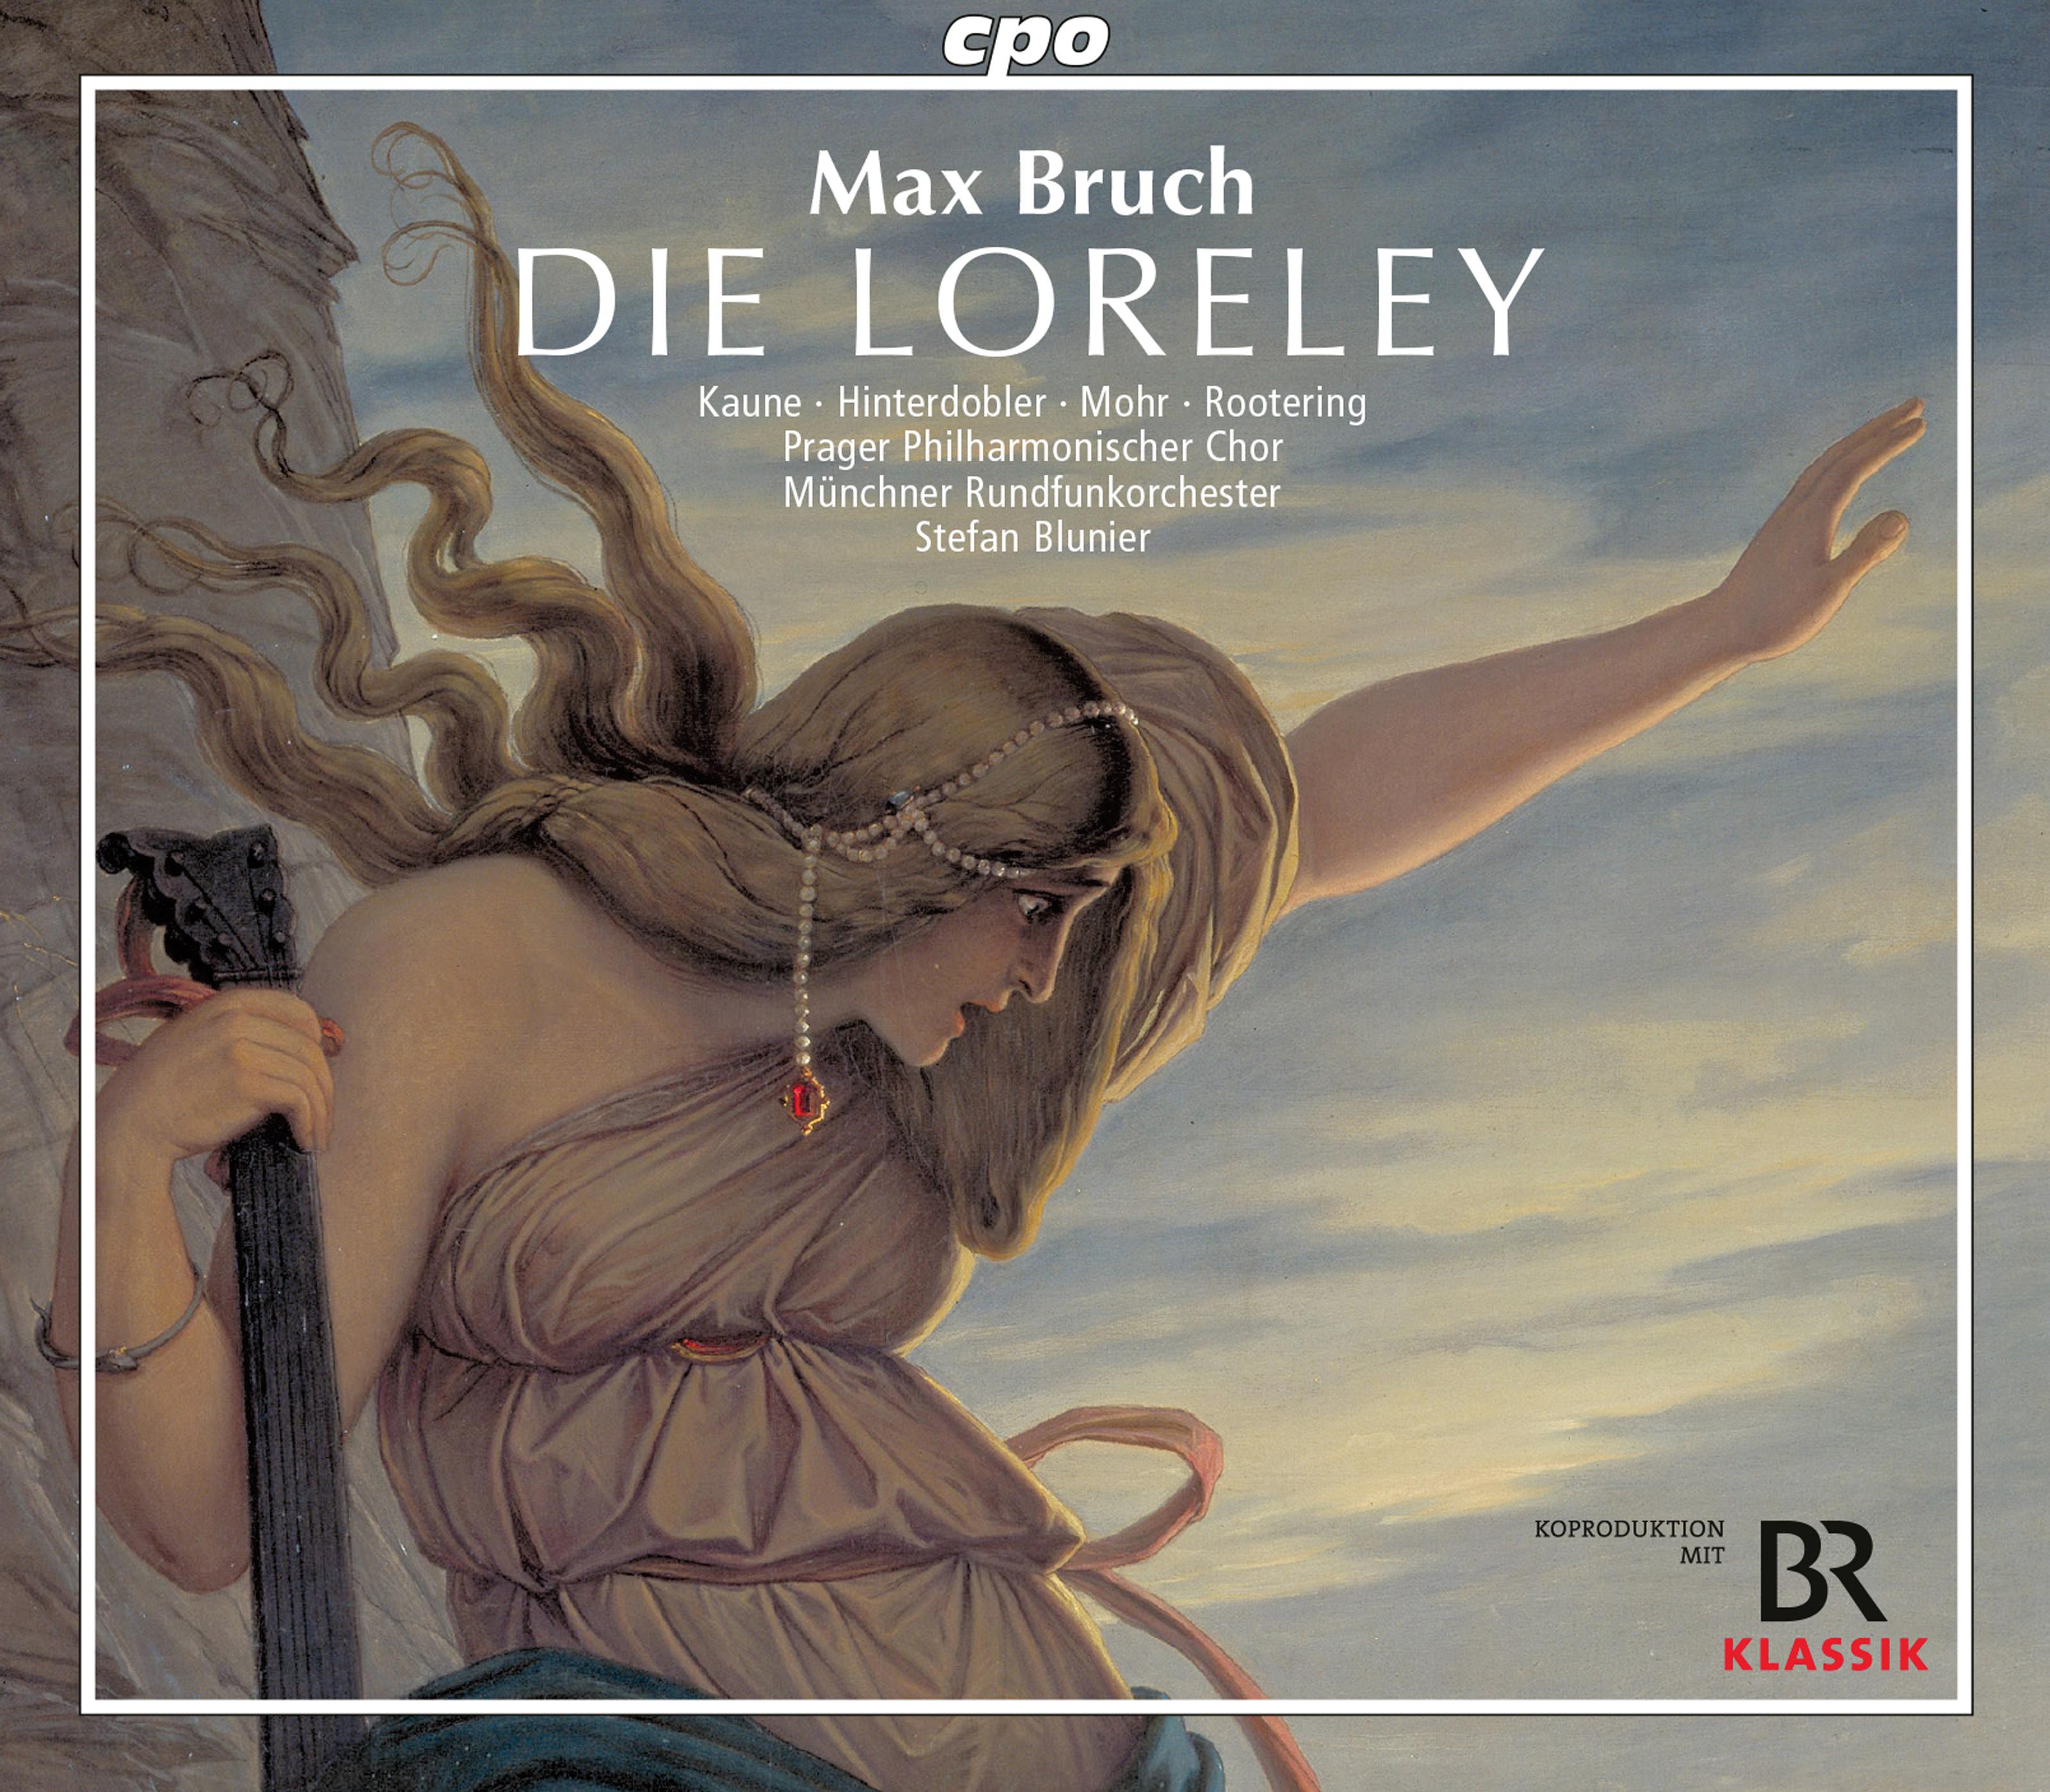 Die Loreley, Act I: Lasst im Wind die Banner wallen